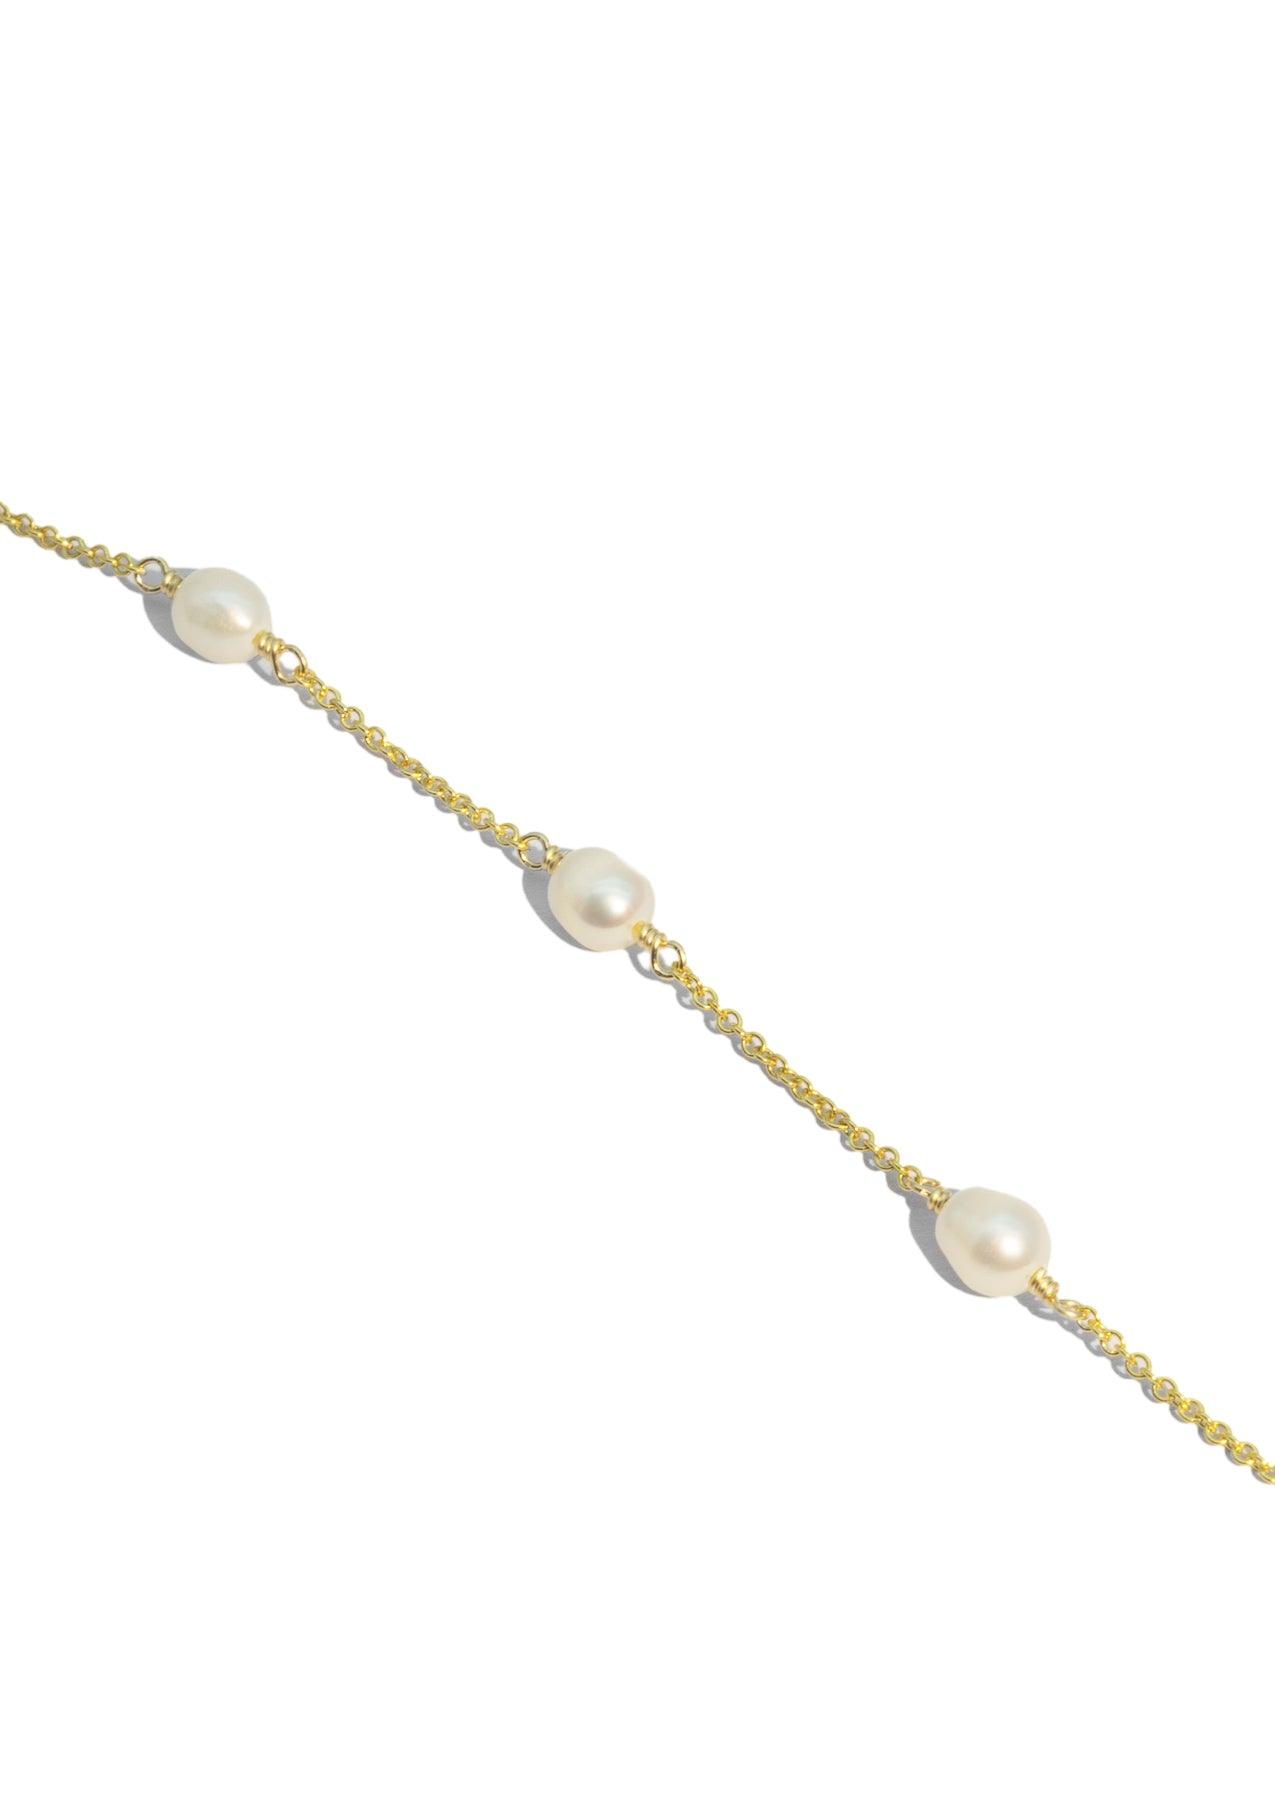 The Lorelai Gold & Pearl Bracelet